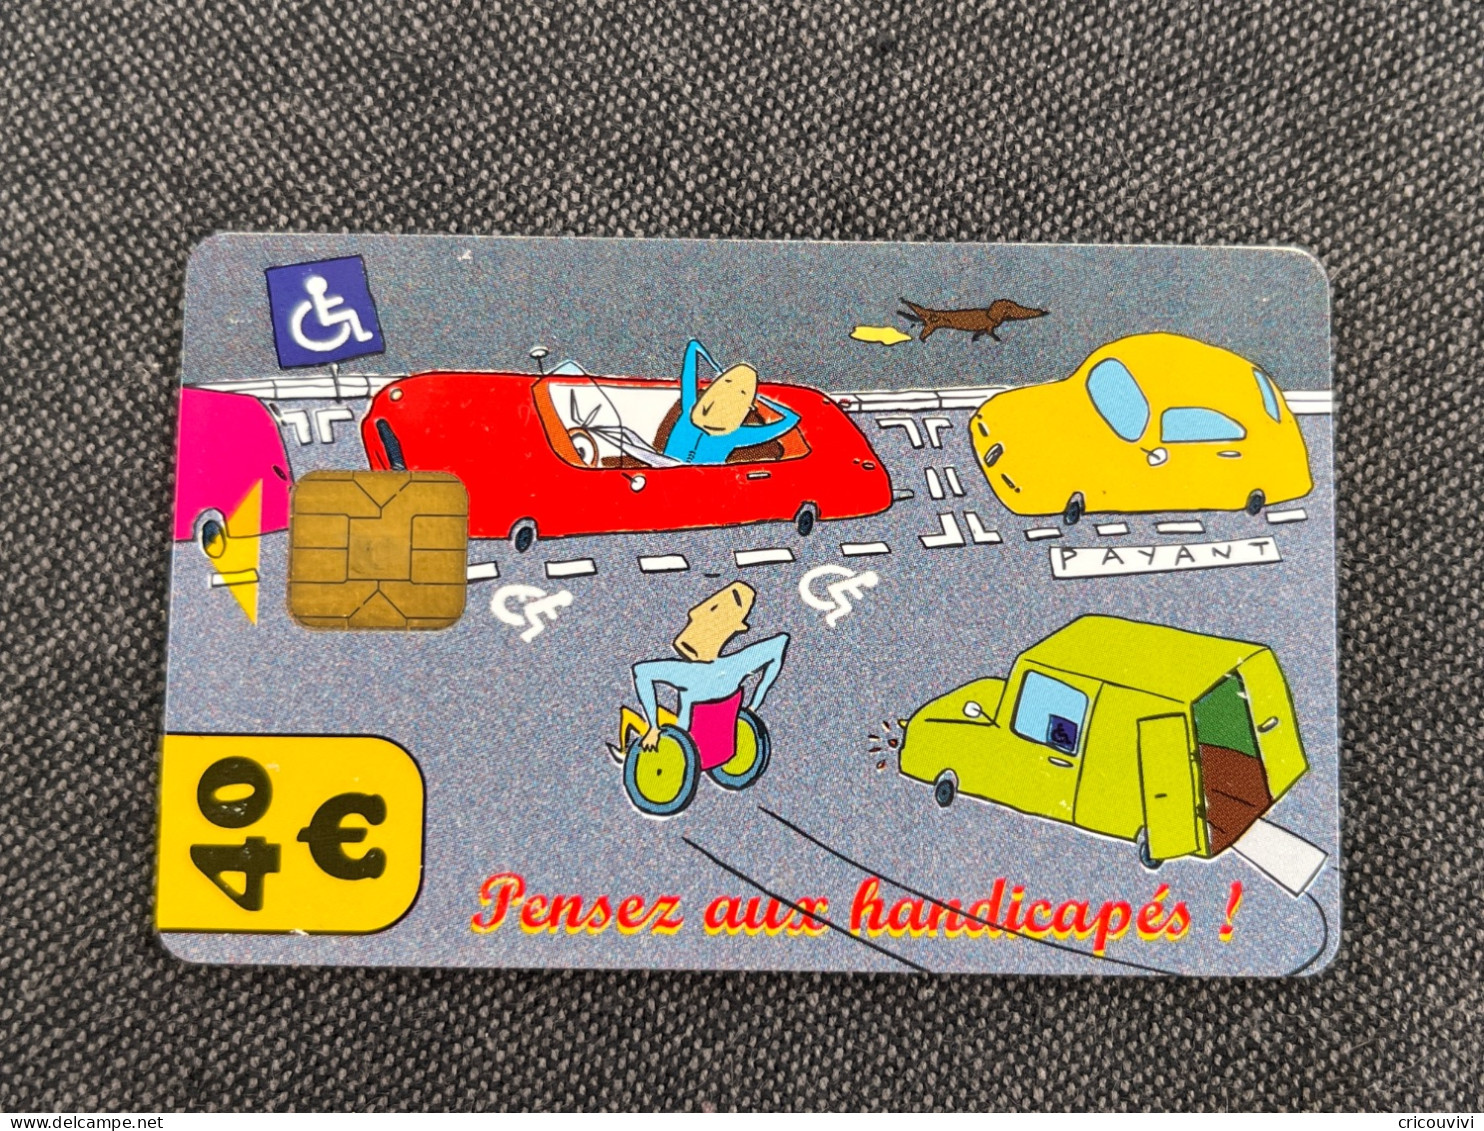 Paris Carte 3 - Parkkarten